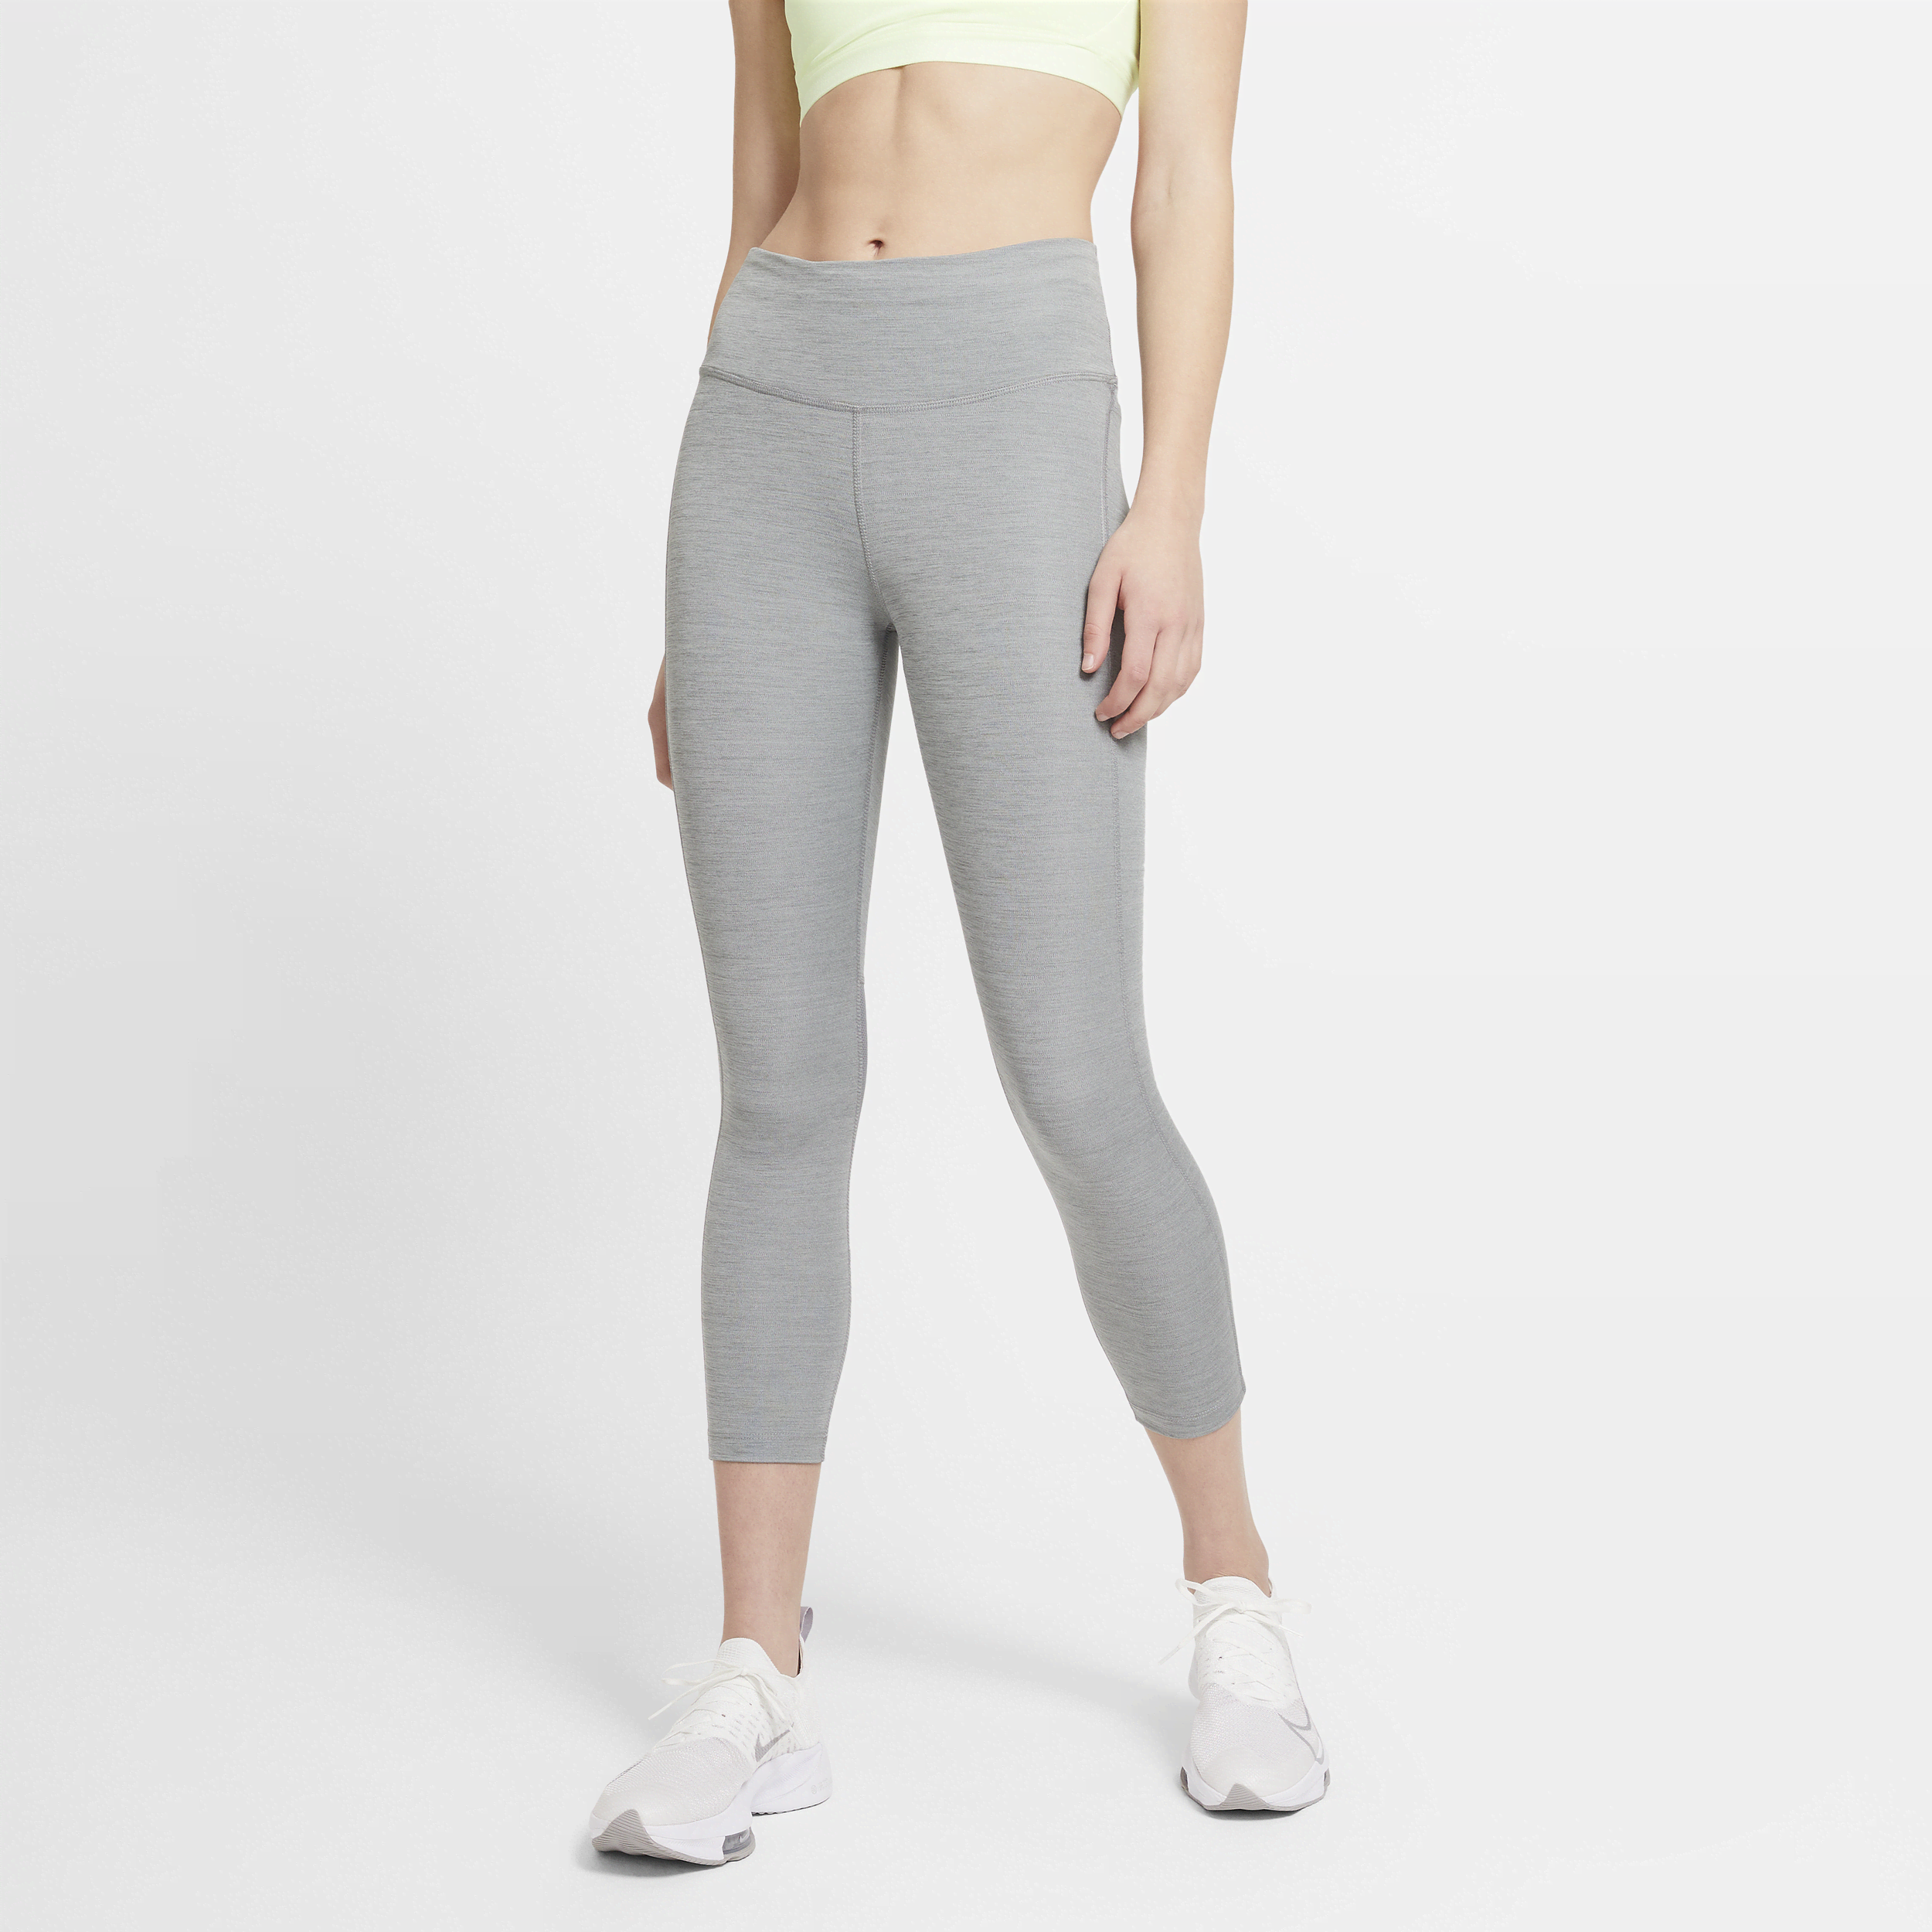 Korte Nike Fast-løbeleggings med mellemhøj talje til kvinder - grå